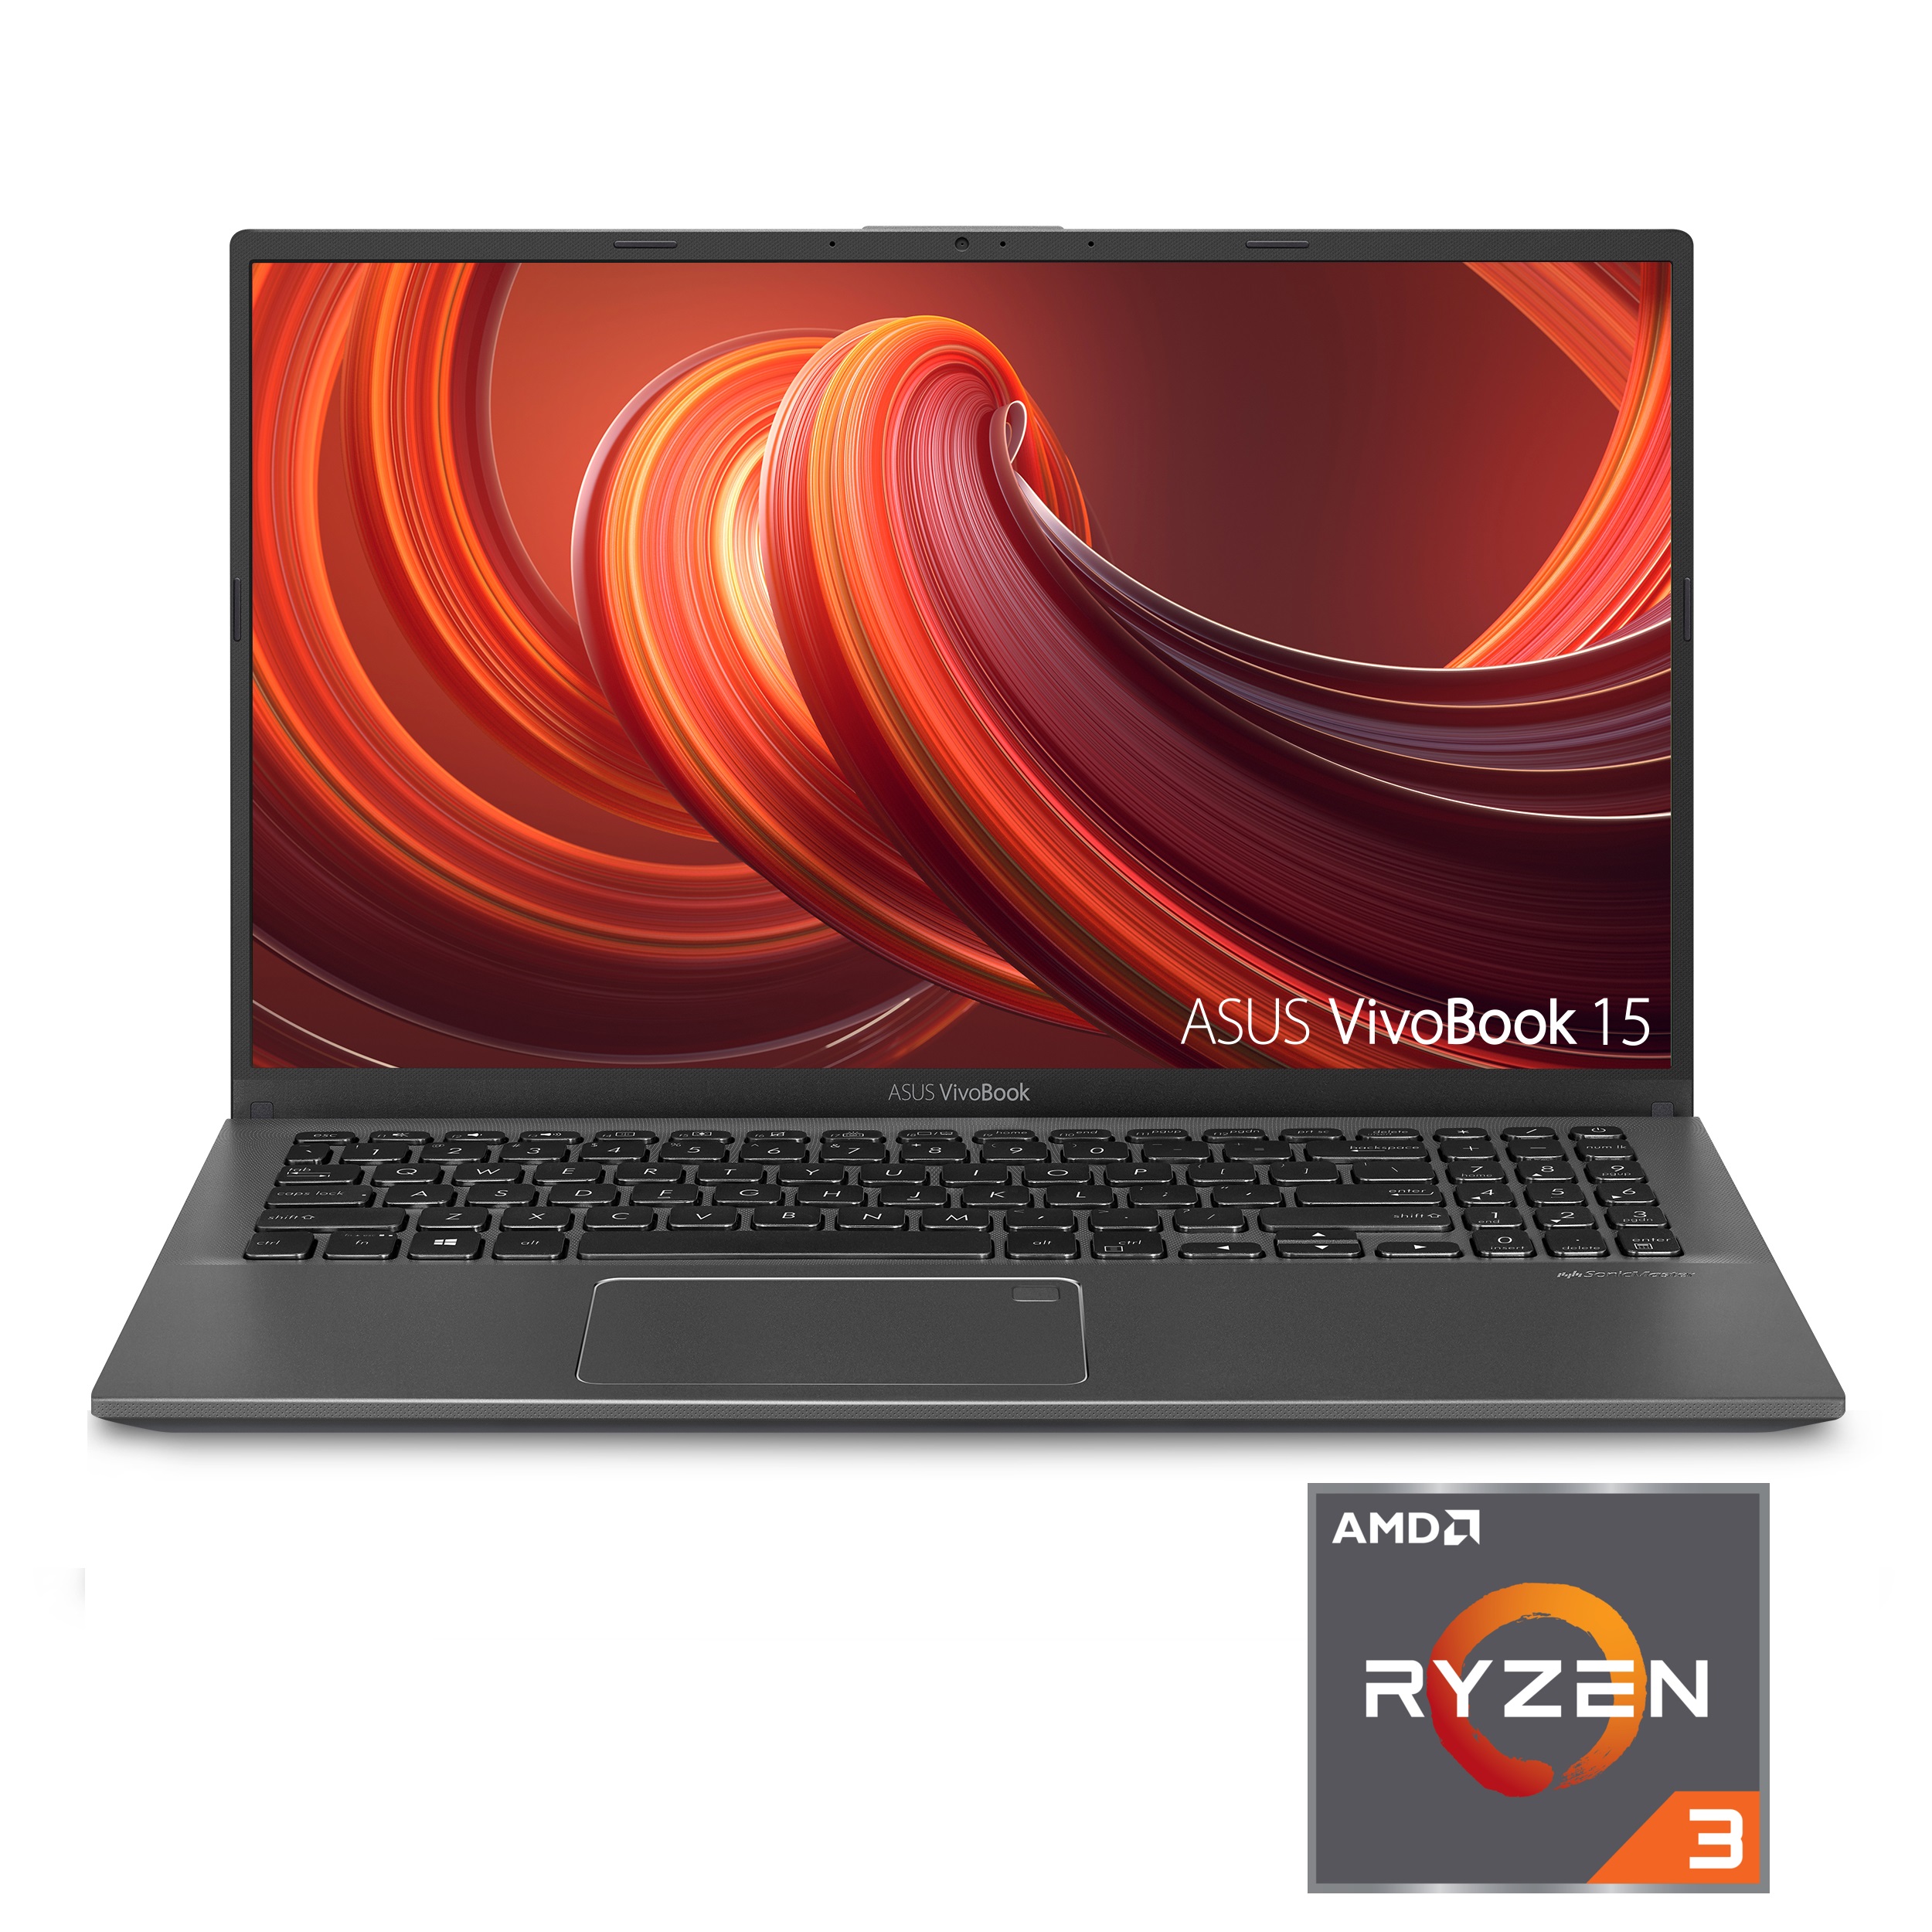 ASUS VivoBook 15 F512DA-WB31 15.6″ Laptop, AMD Ryzen 3, 4GB RAM, 128GB SSD